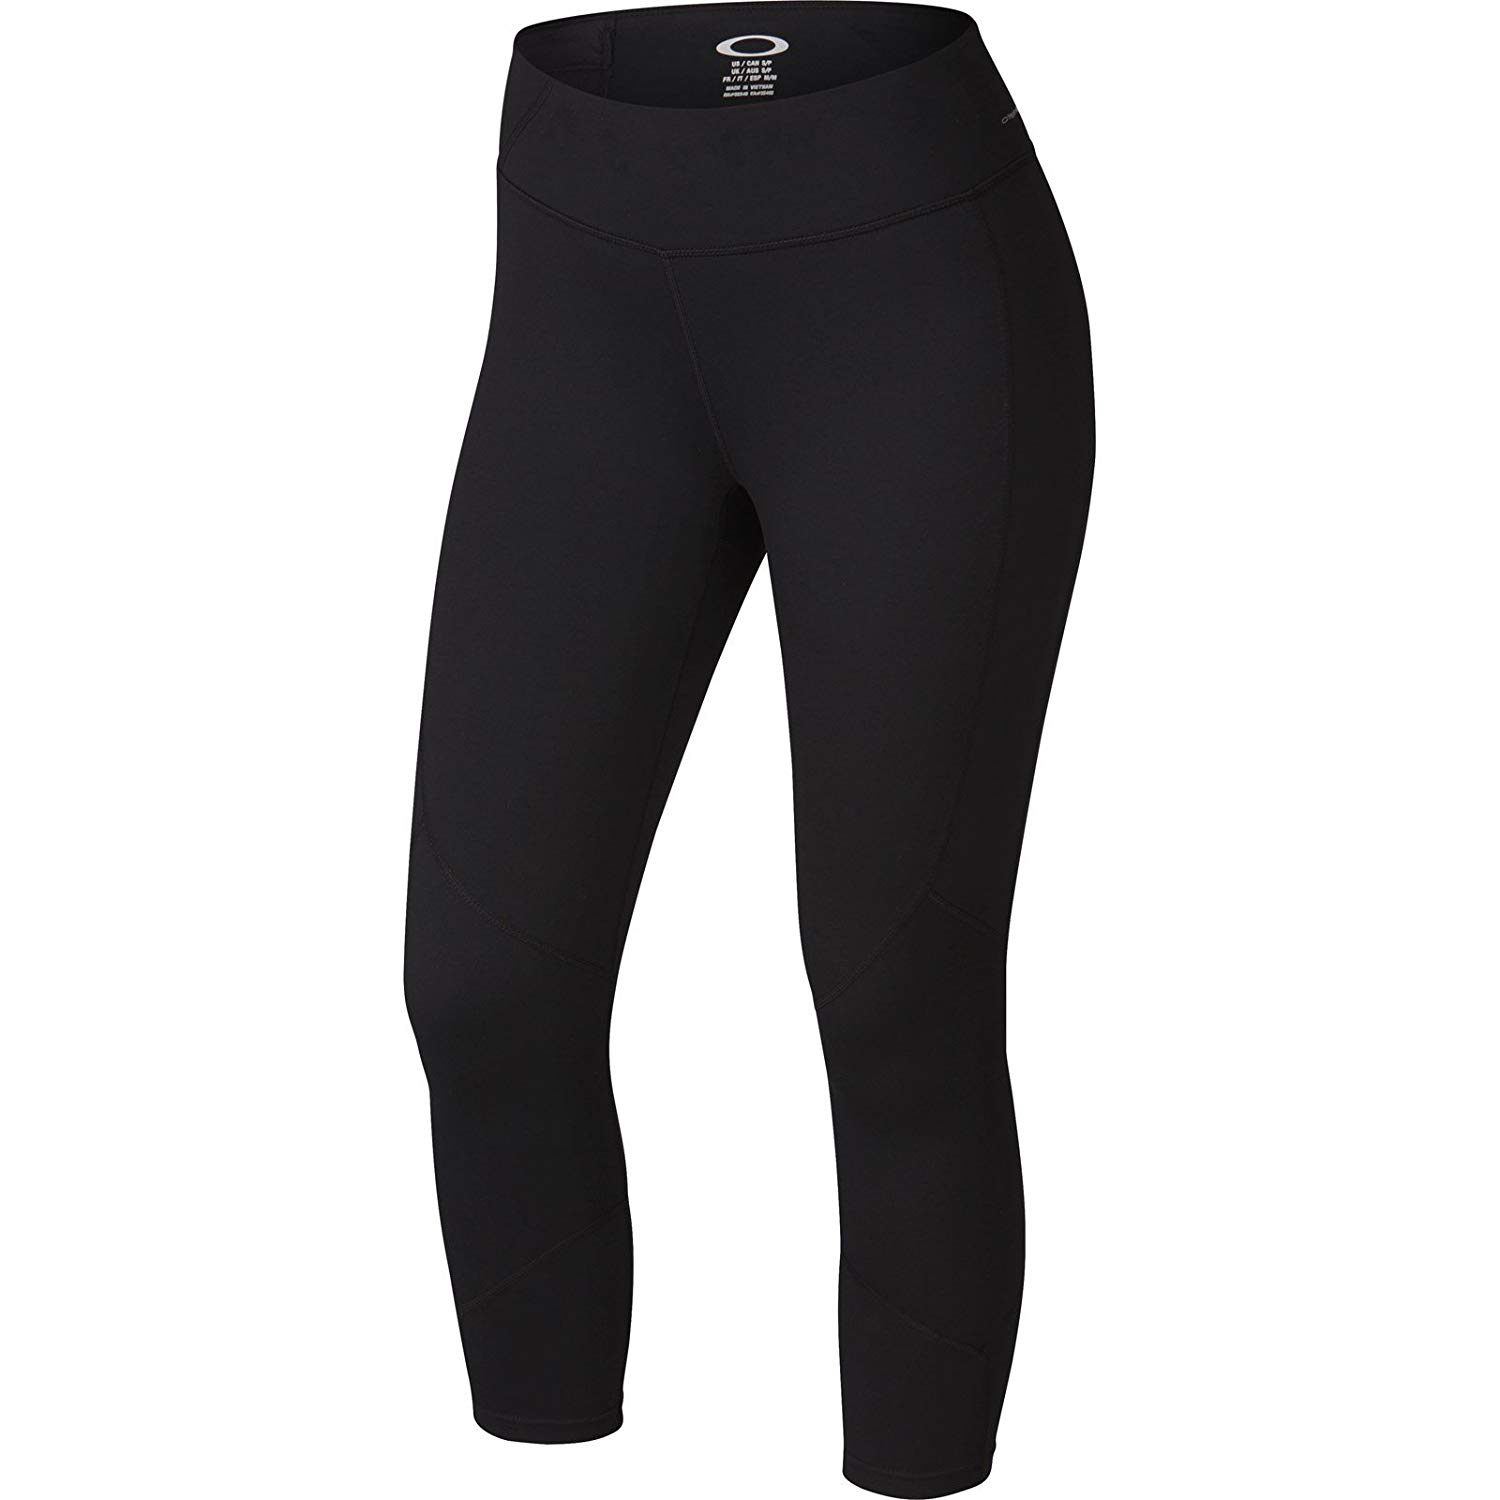 Oakley Women's Strength Active Capri Pants/Tights, Black [XL